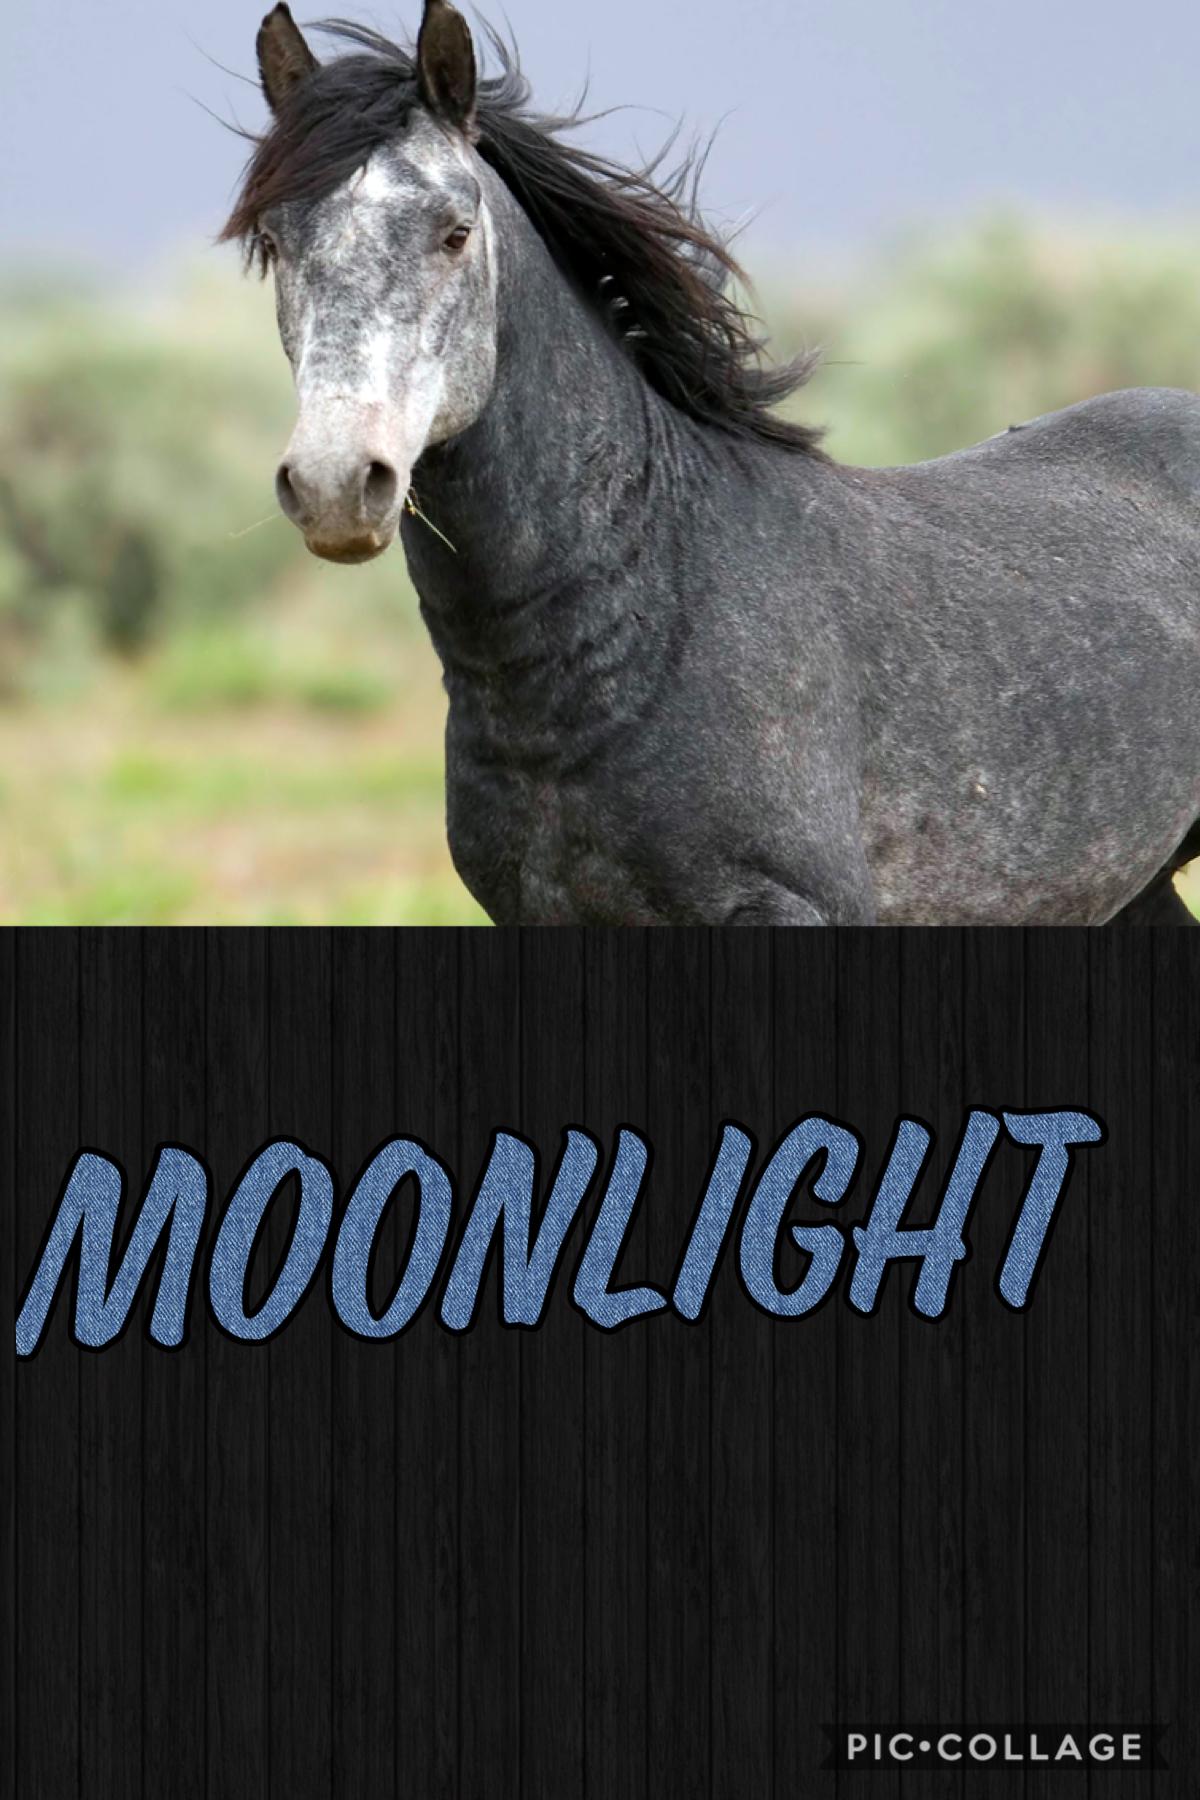 My sisters horse Moonlight